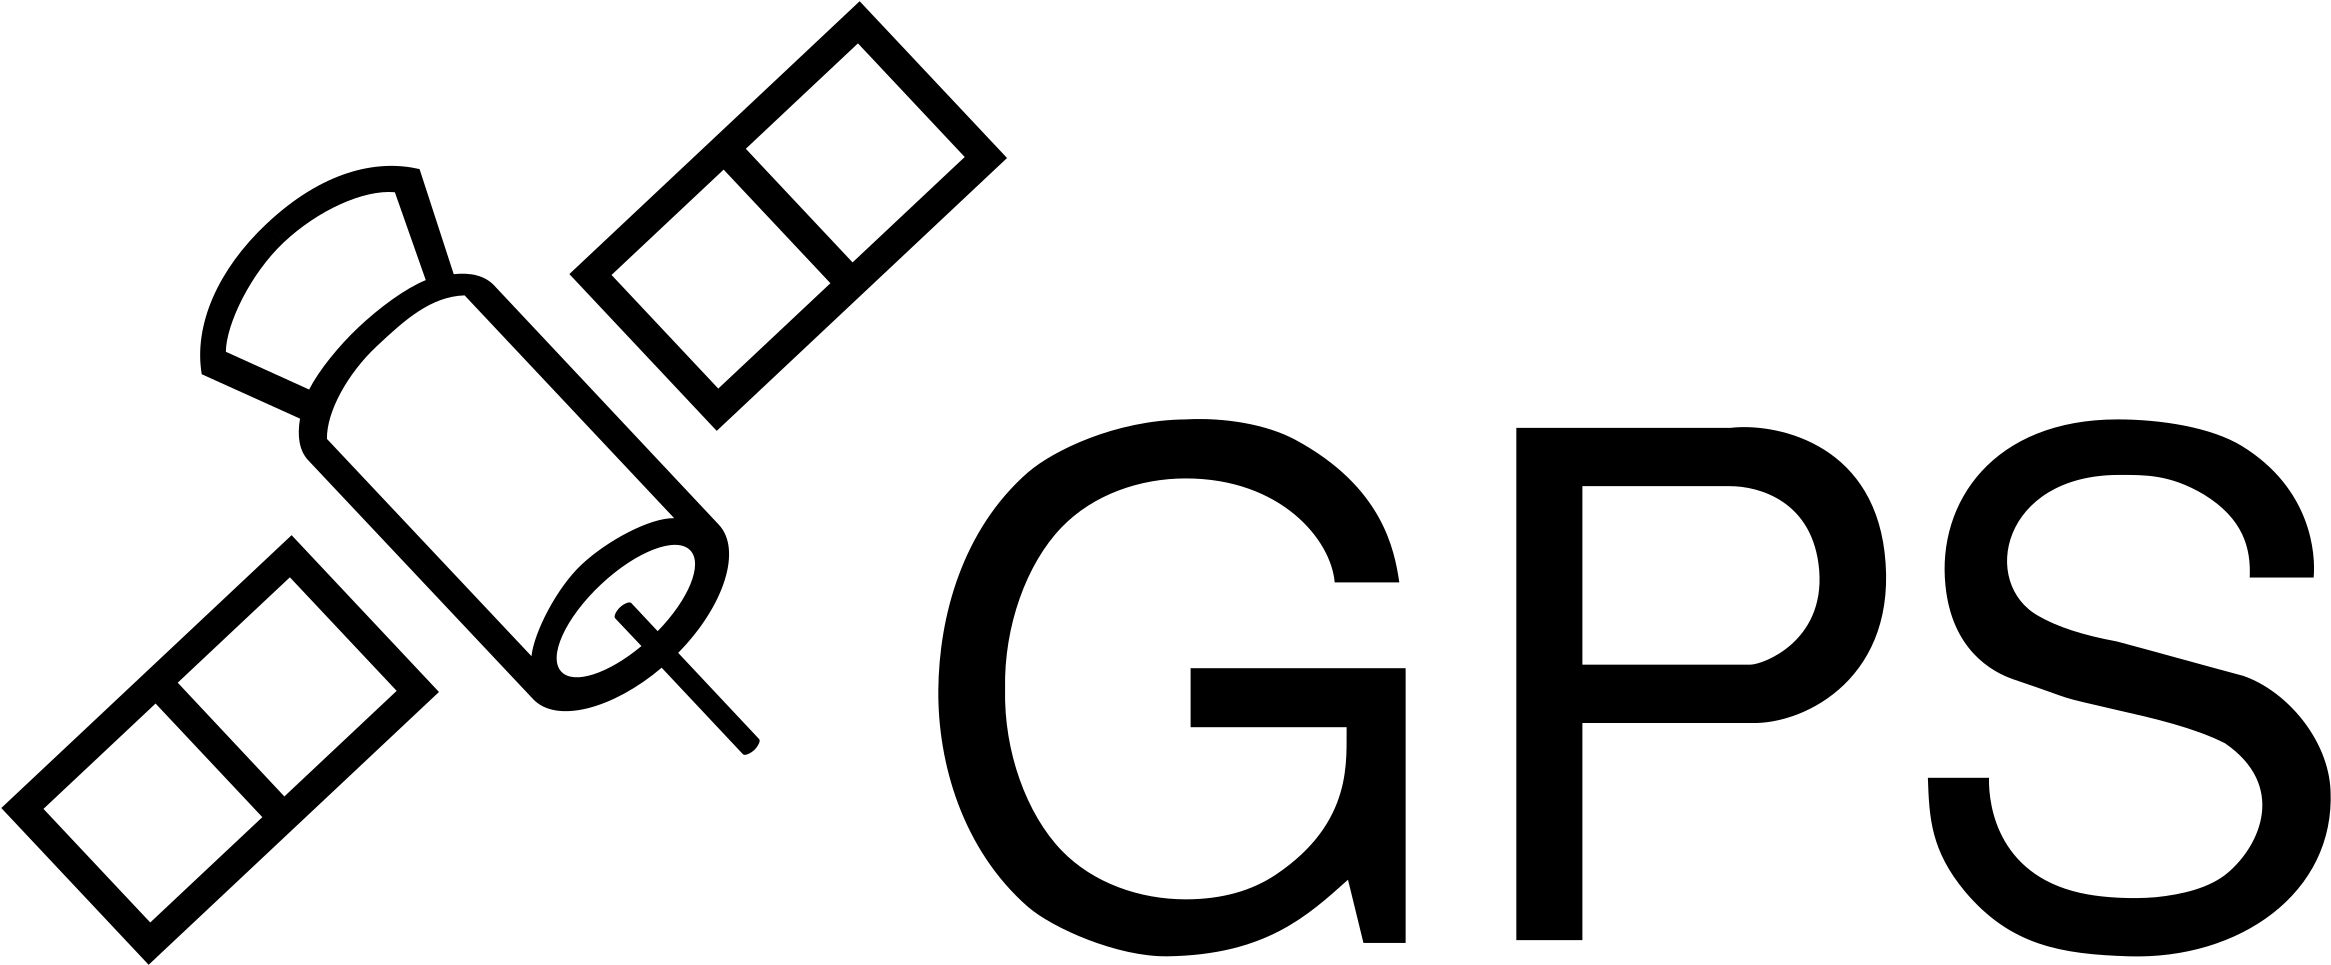 Gps Png Photo - Gps Tracker Logo (2400x2400)